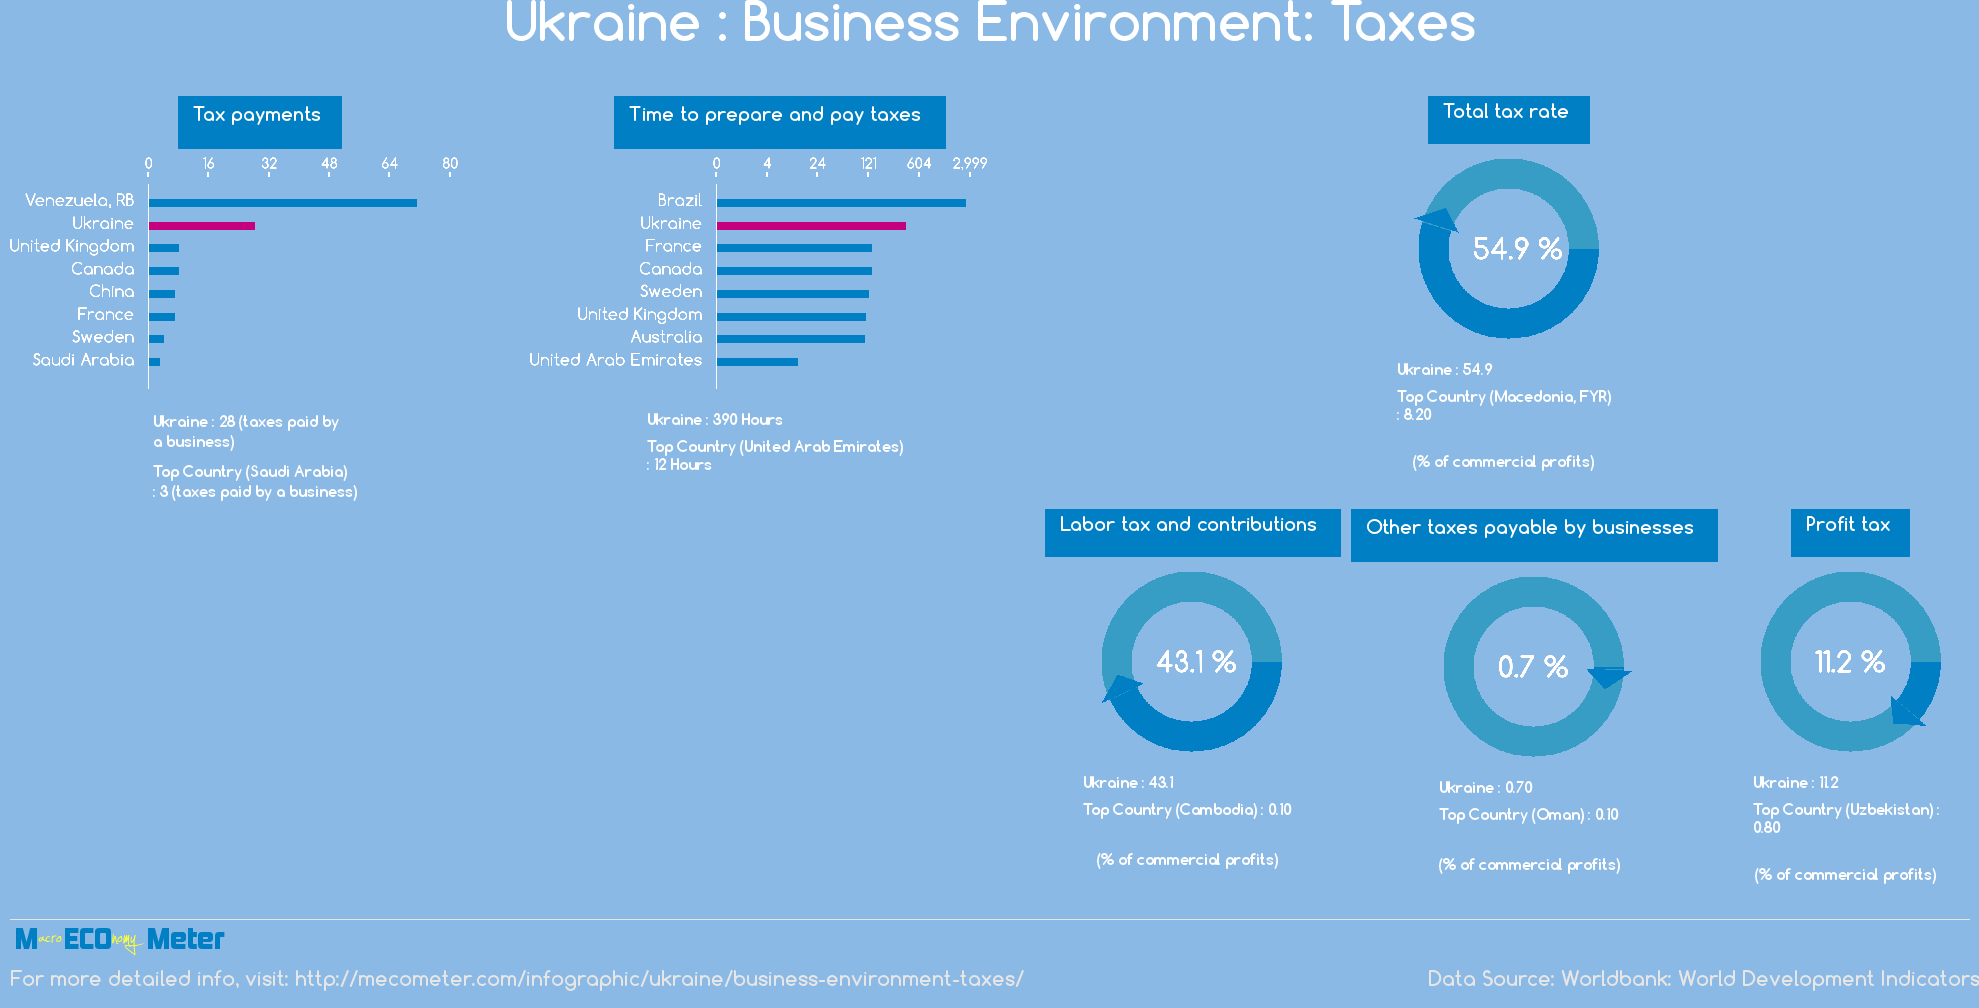 Ukraine : Business Environment: Taxes